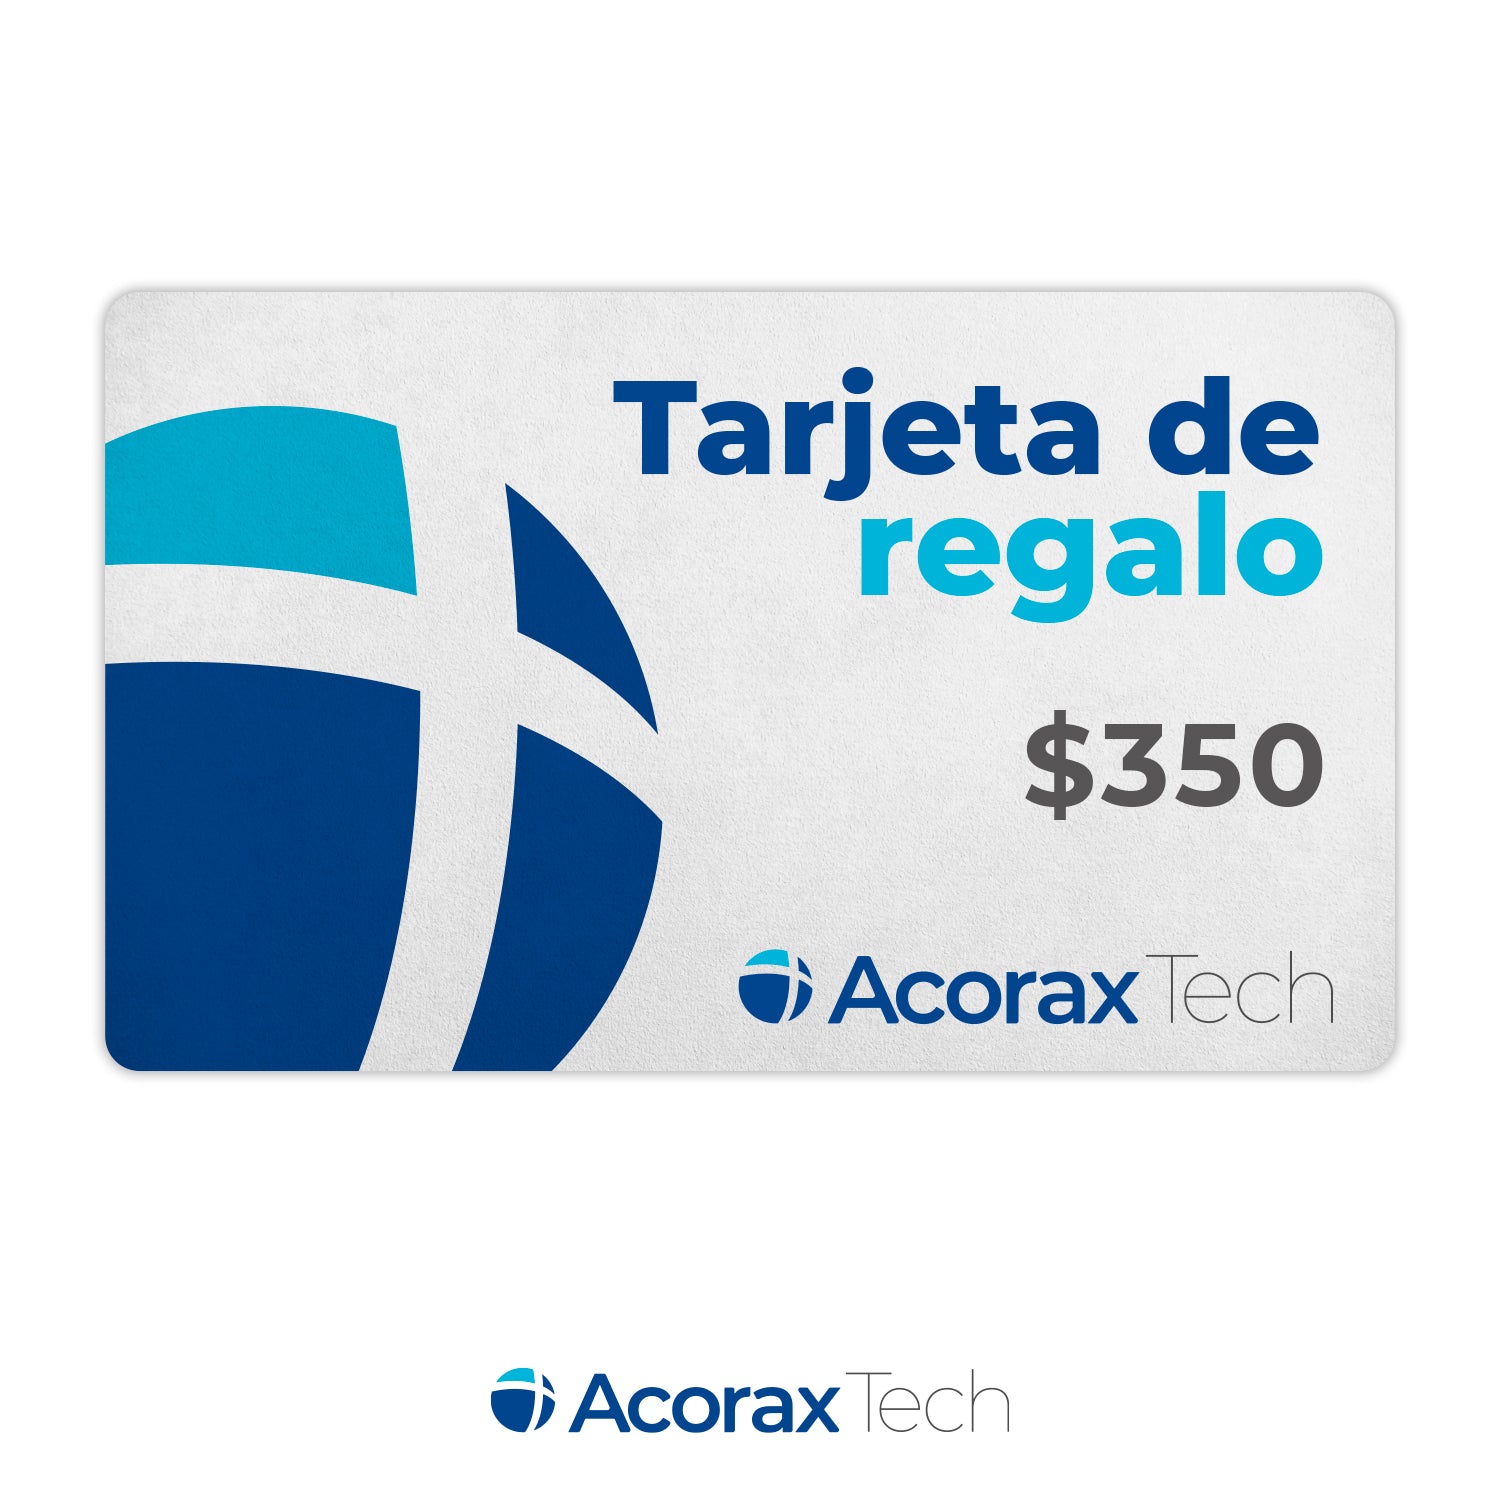 Tarjeta de Regalo Acorax Tech